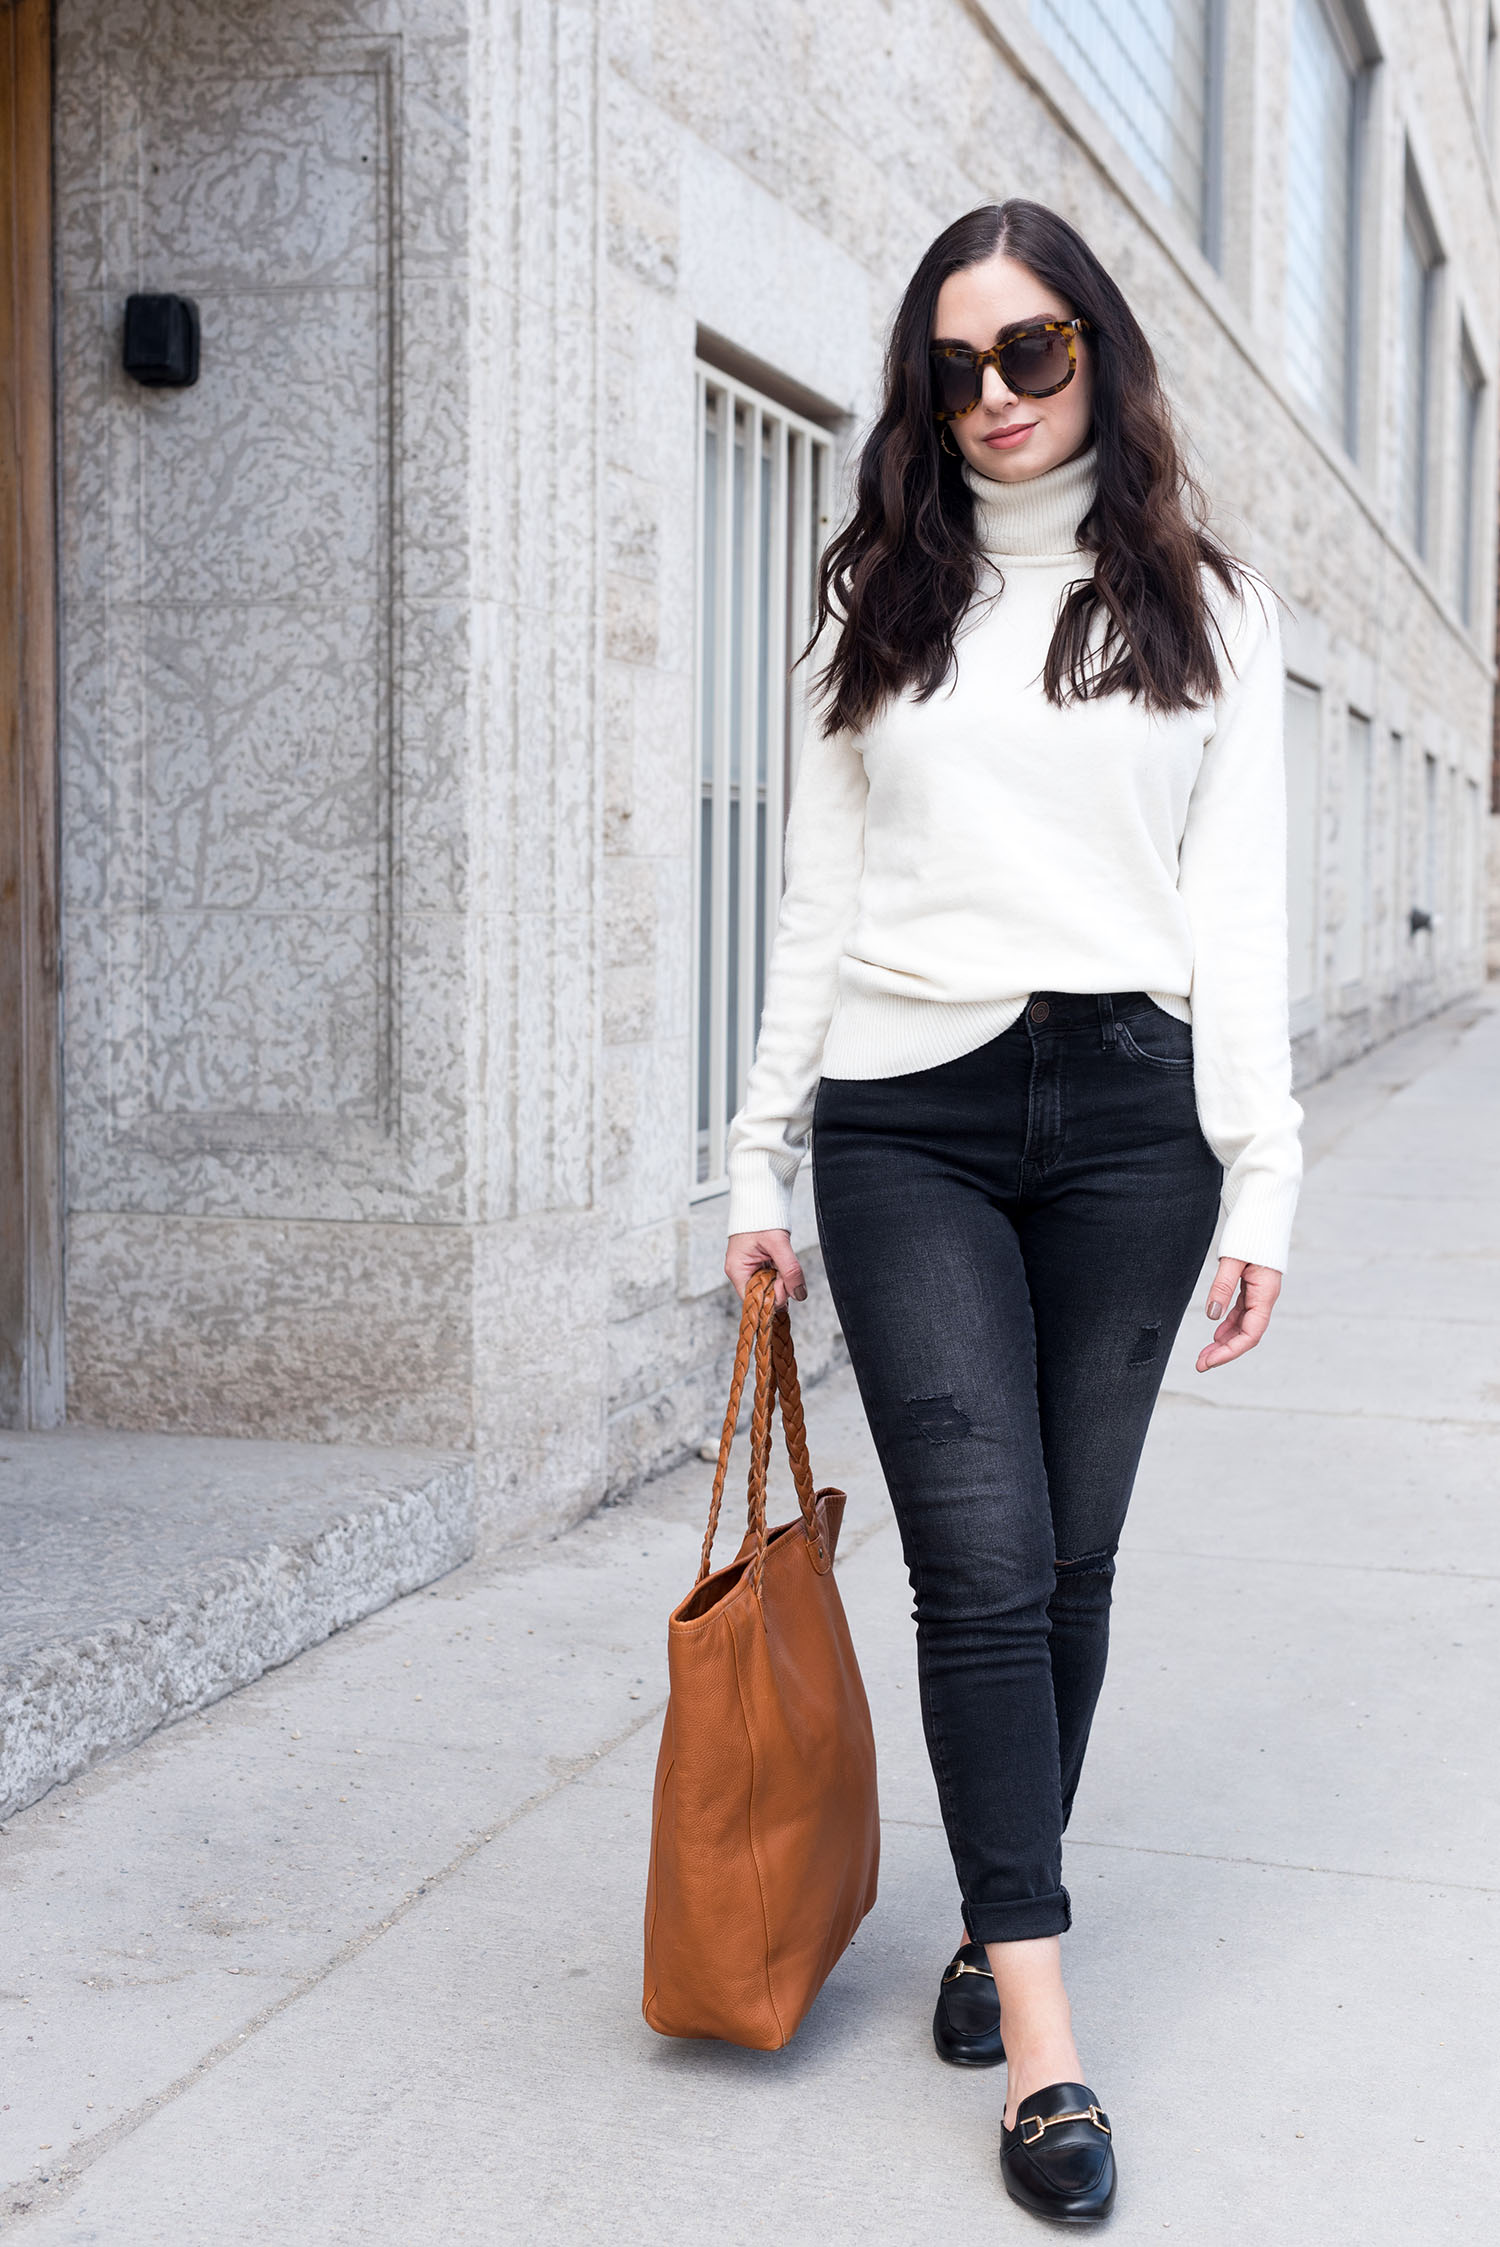 Top Winnipeg fashion blogger Cee Fardoe of Coco & Vera walks outside Mall Plaza wearing black Mavi jeans and a cream sweater from Noul